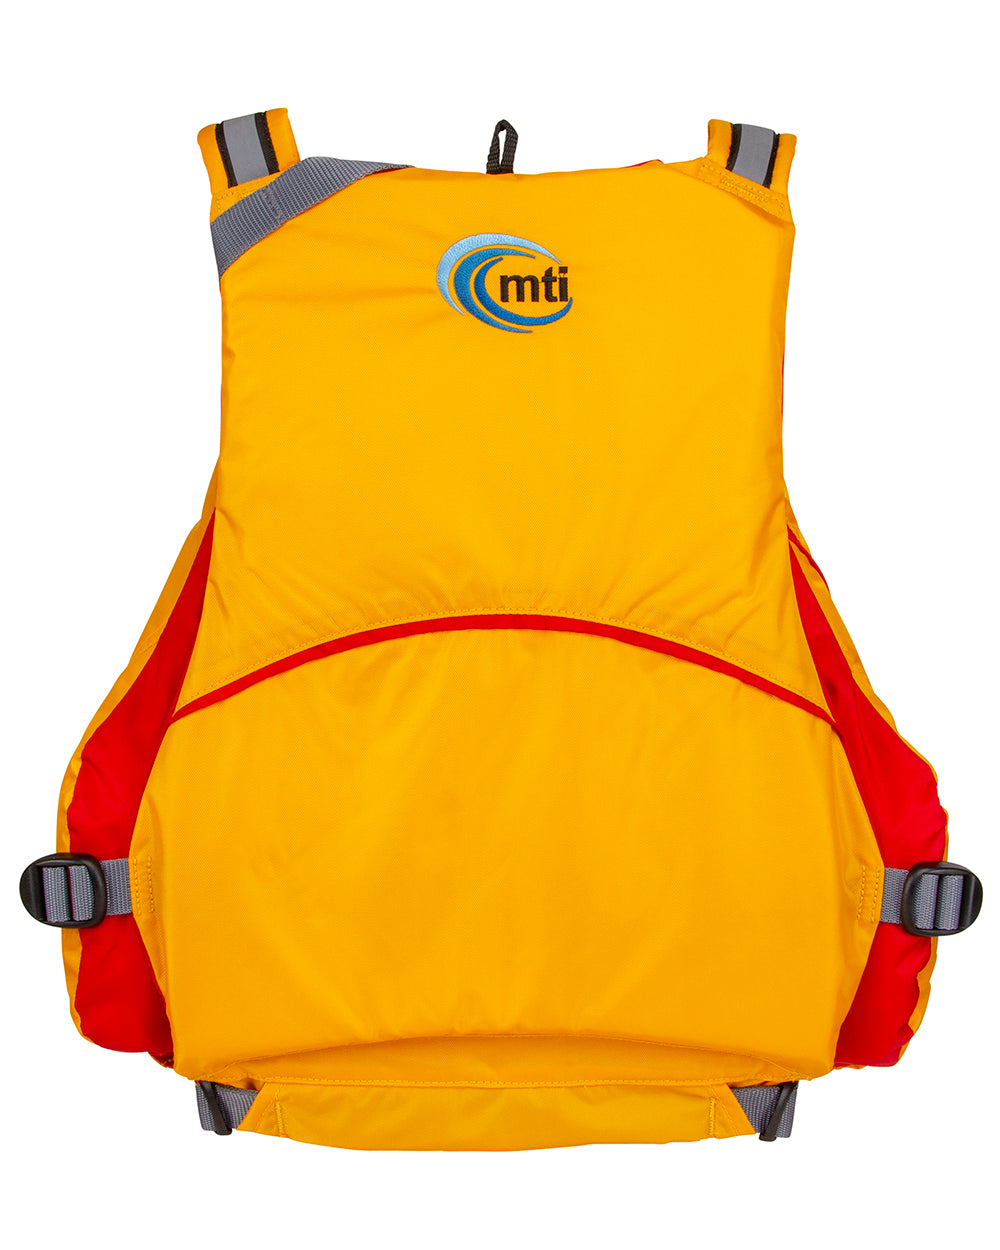 MTI Journey PFD Life Vest - only 1 lb!